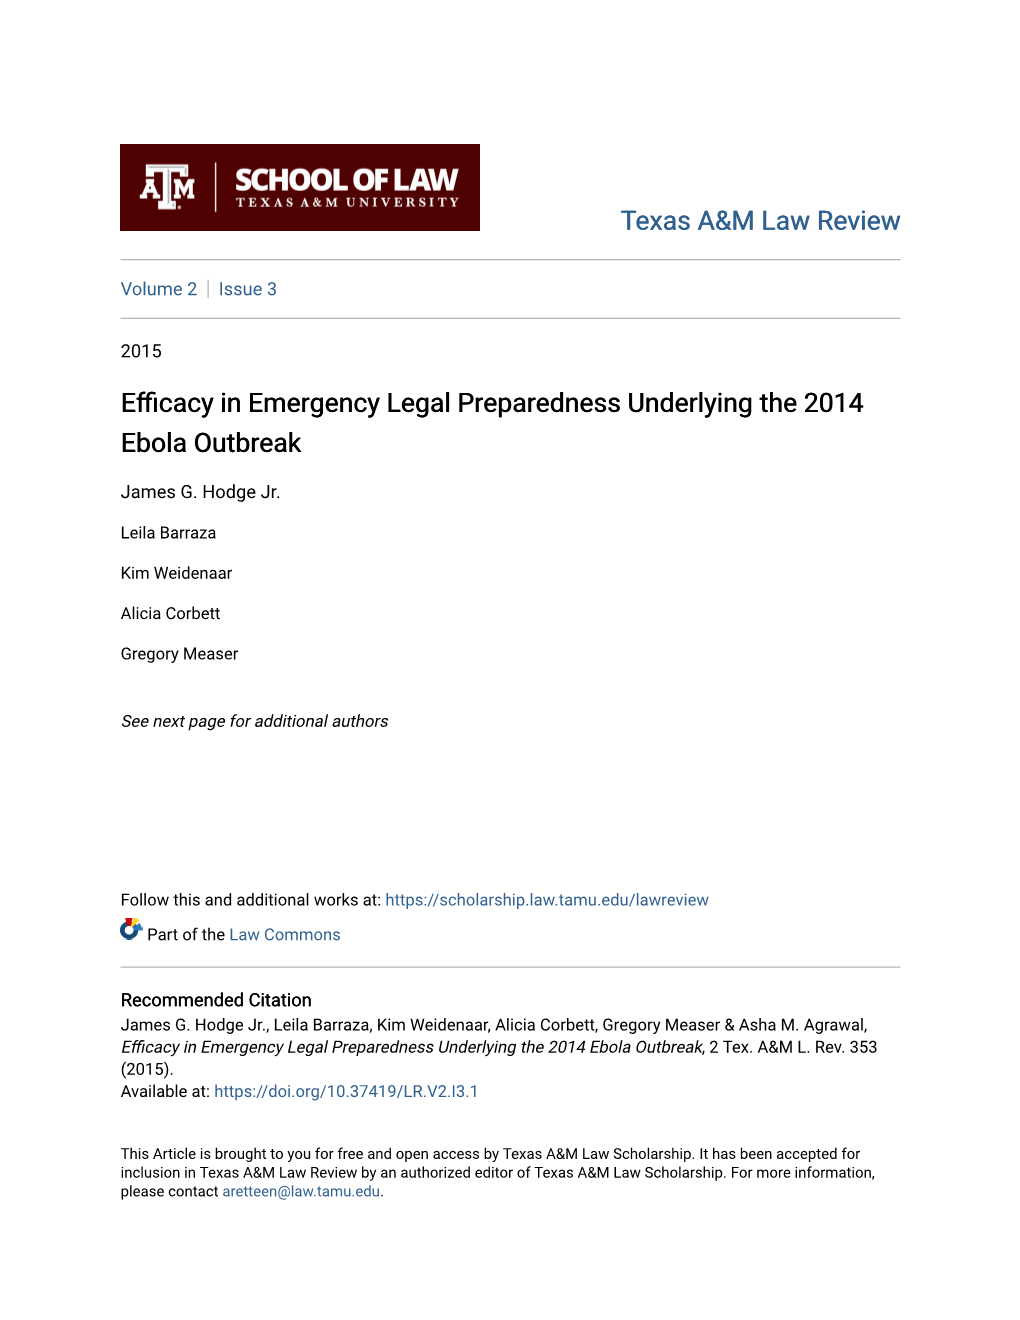 Efficacy in Emergency Legal Preparedness Underlying the 2014 Ebola Outbreak